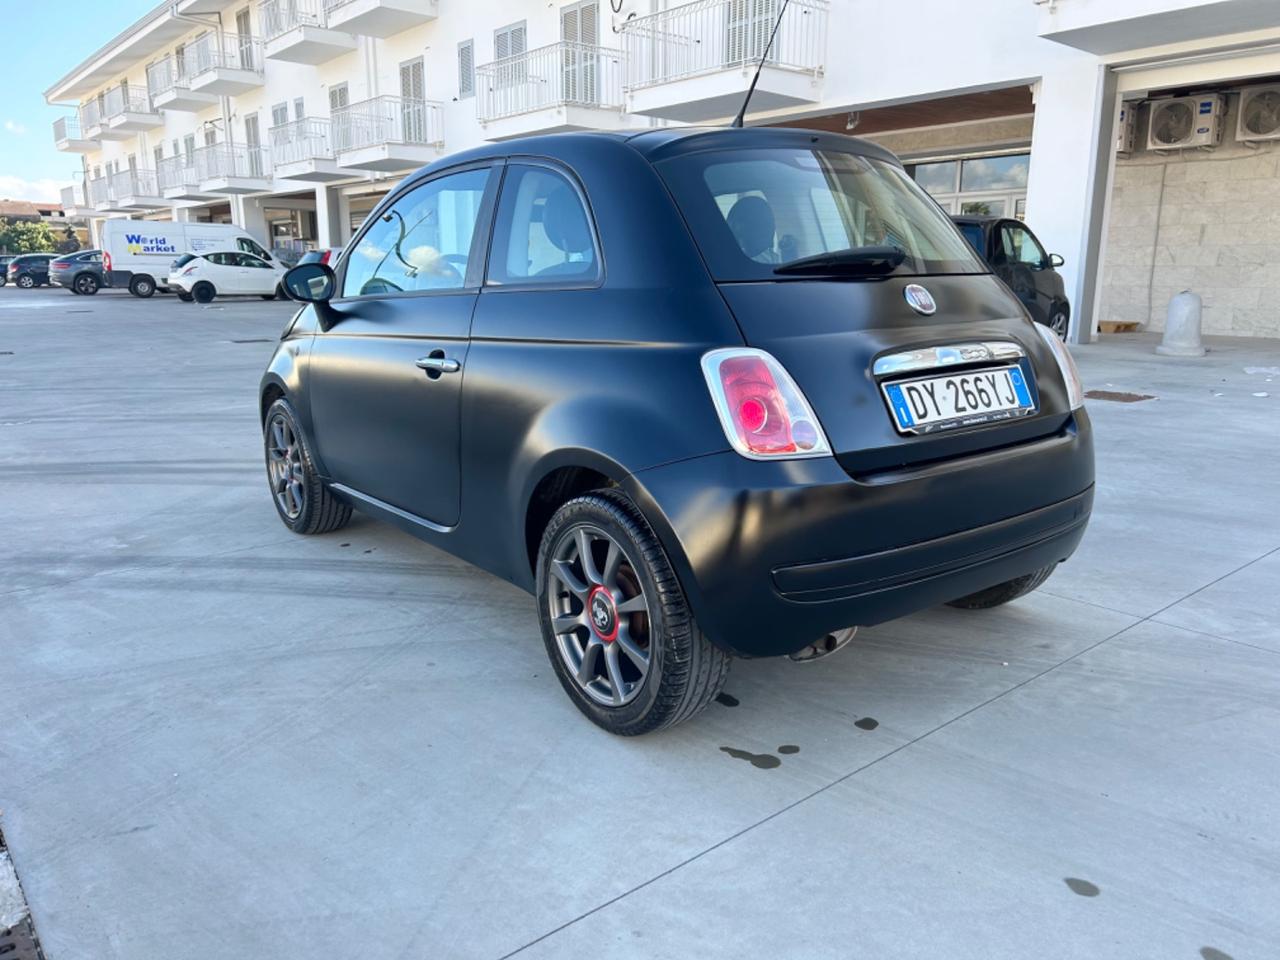 Fiat 500 1.2 Pop